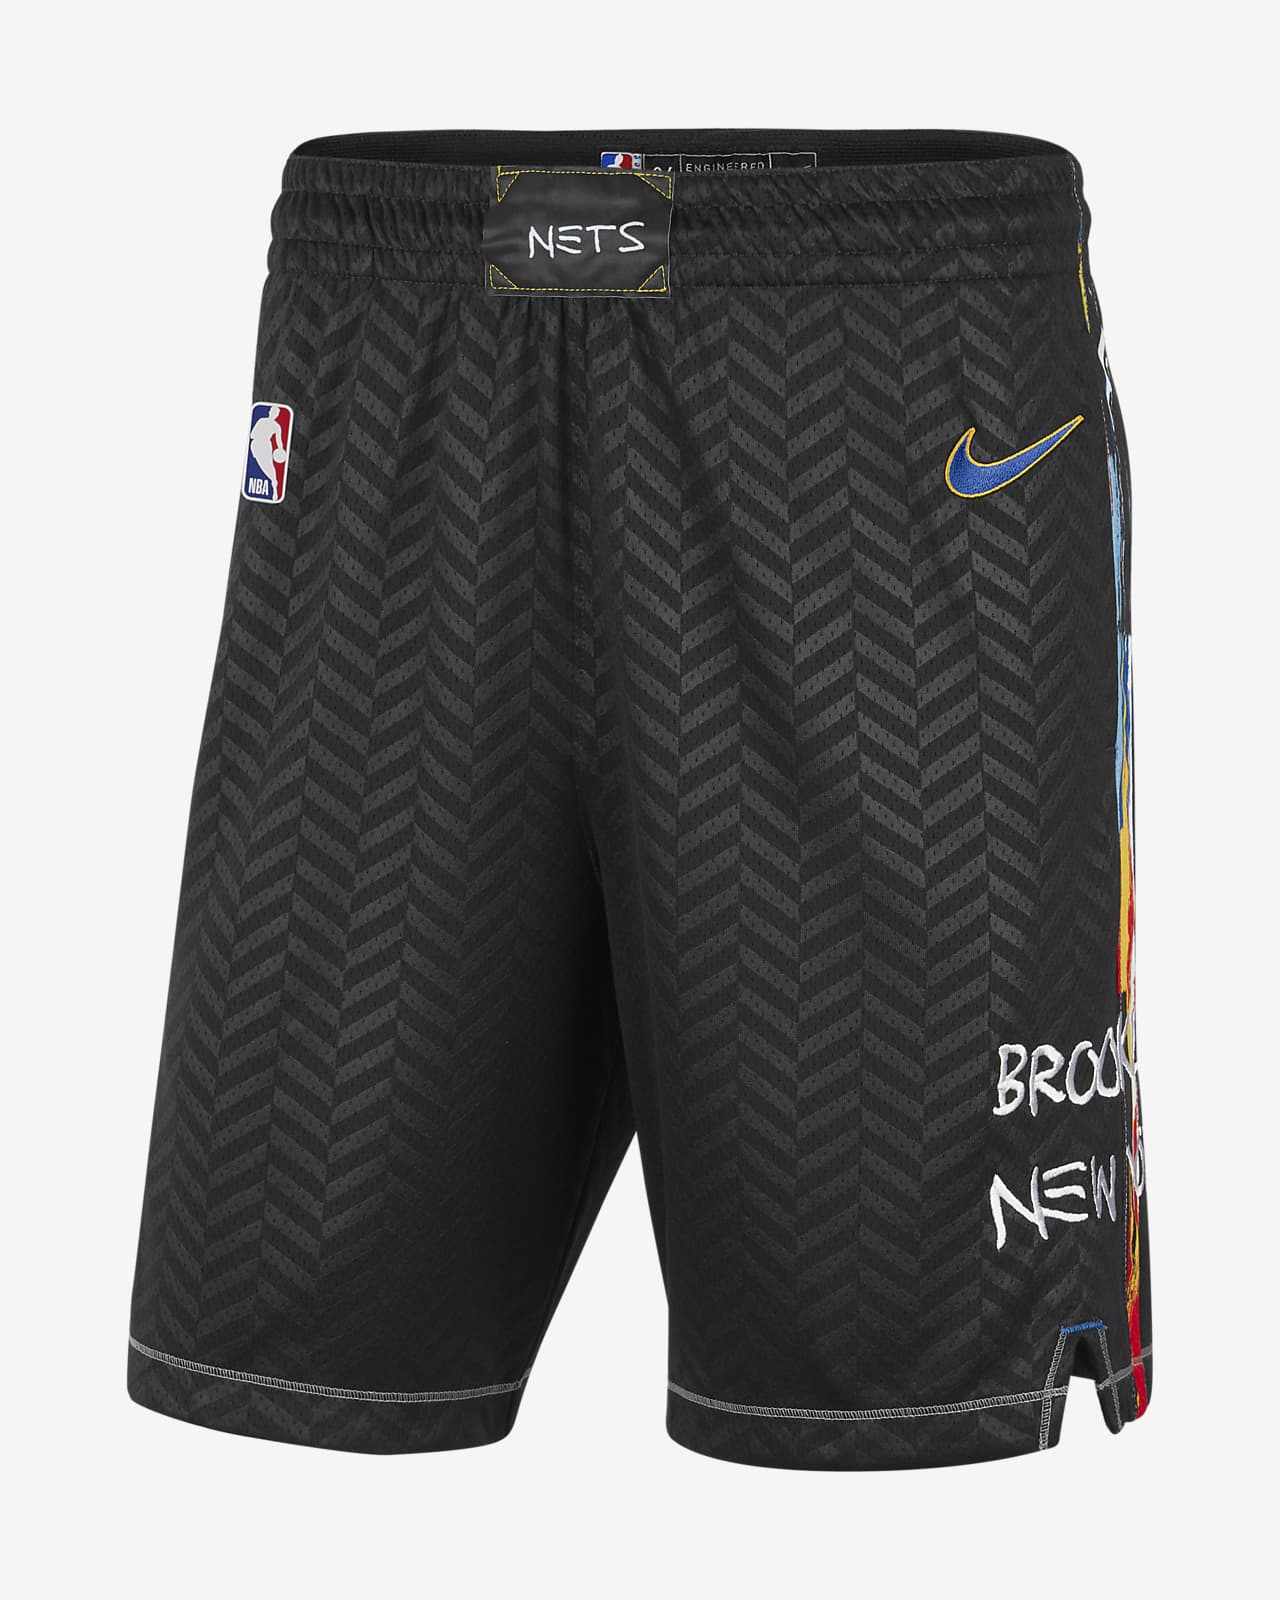 nets city edition shorts